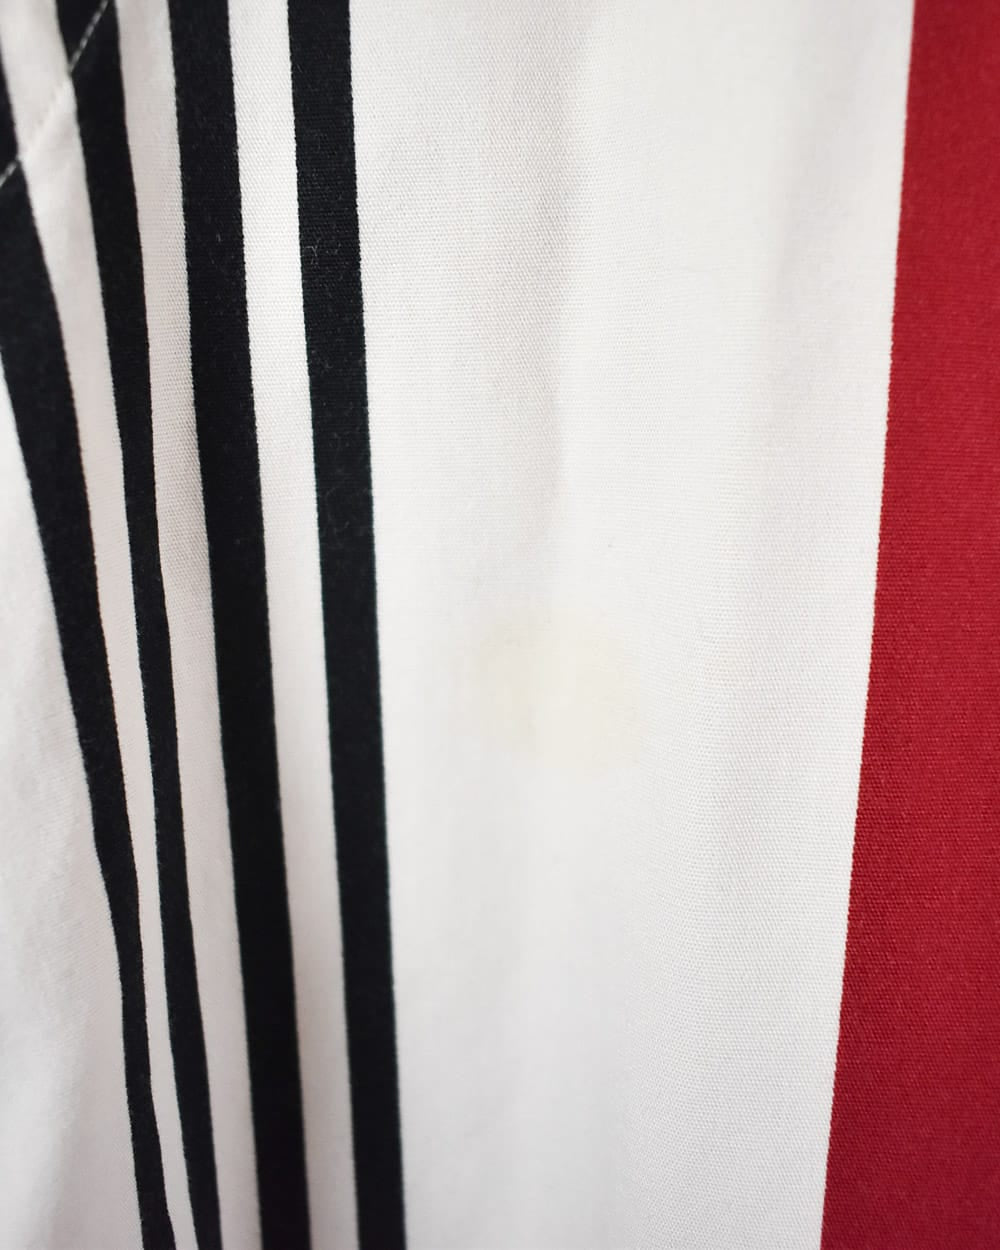 Red Nautica Striped Shirt - Medium